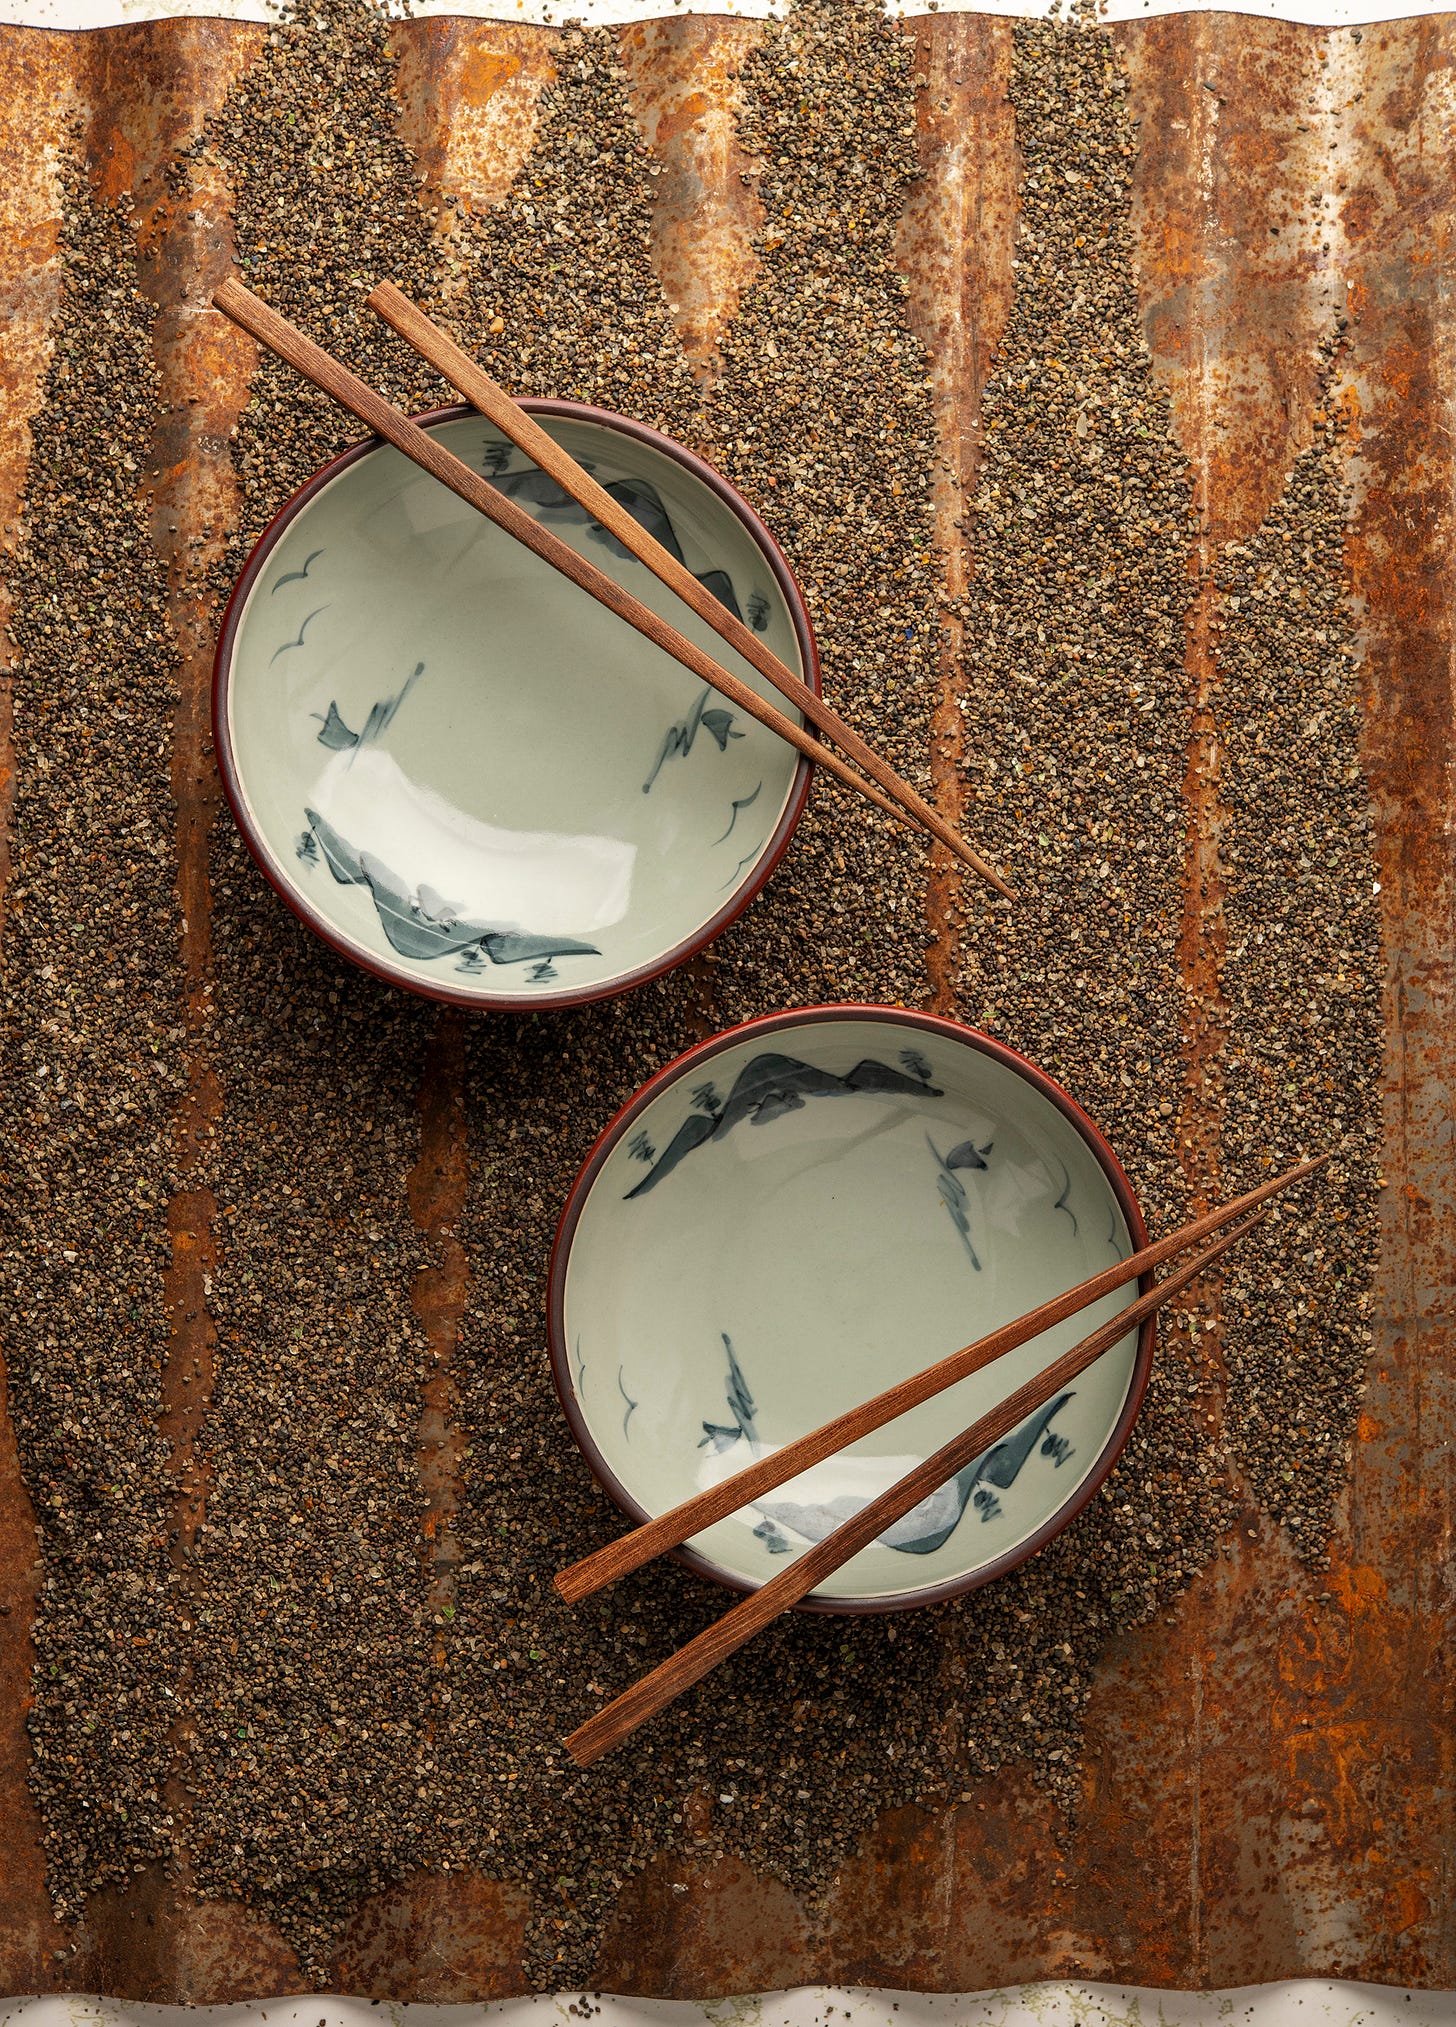 Empty bowls with chopsticks